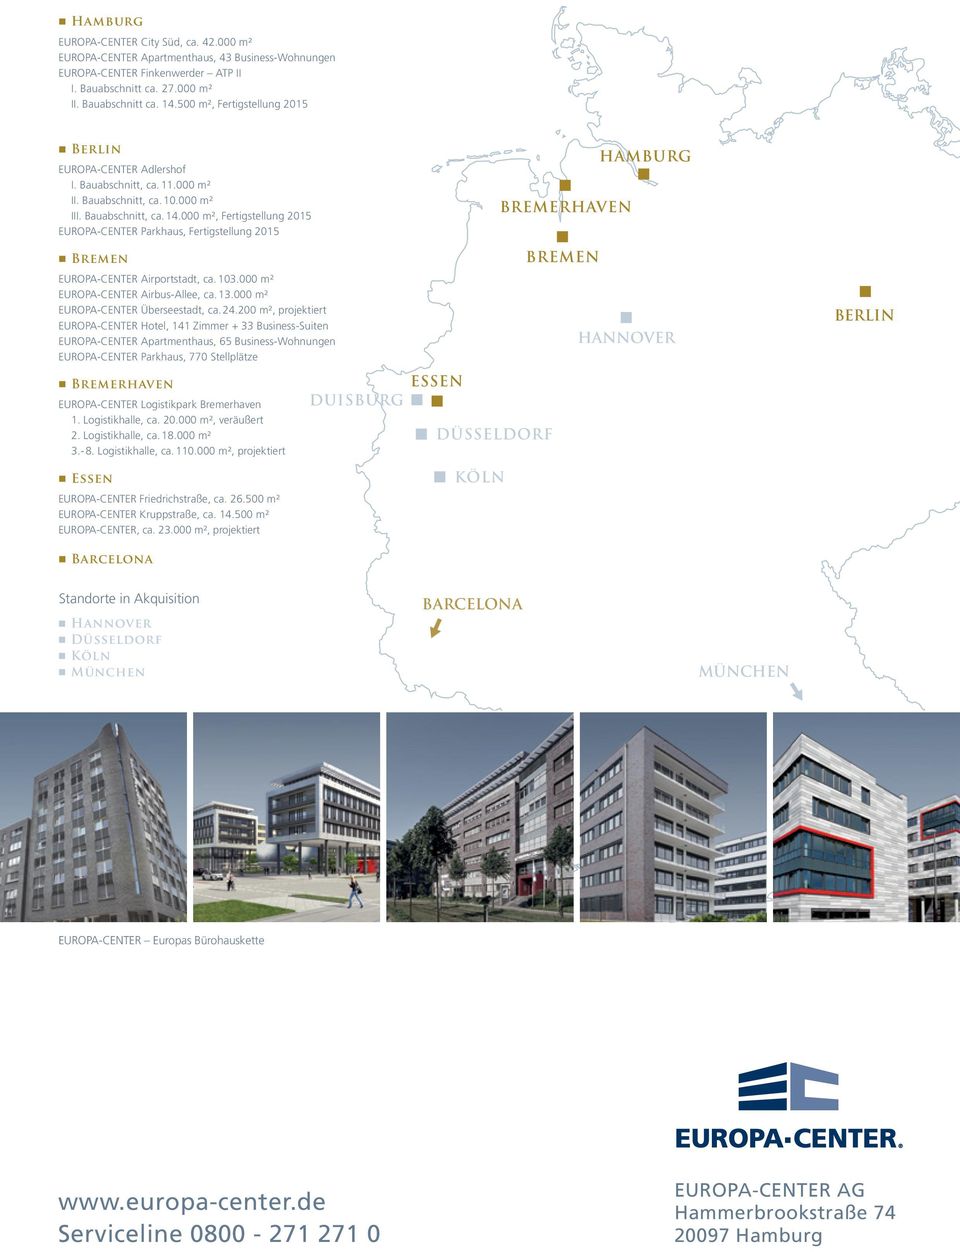 000 m², Fertigstellug 2015 EUROPA-CENTER Parkhaus, Fertigstellug 2015 Breme EUROPA-CENTER Airportstadt, ca. 103.000 m² EUROPA-CENTER Airbus-Allee, ca. 13.000 m² EUROPA-CENTER Überseestadt, ca. 24.